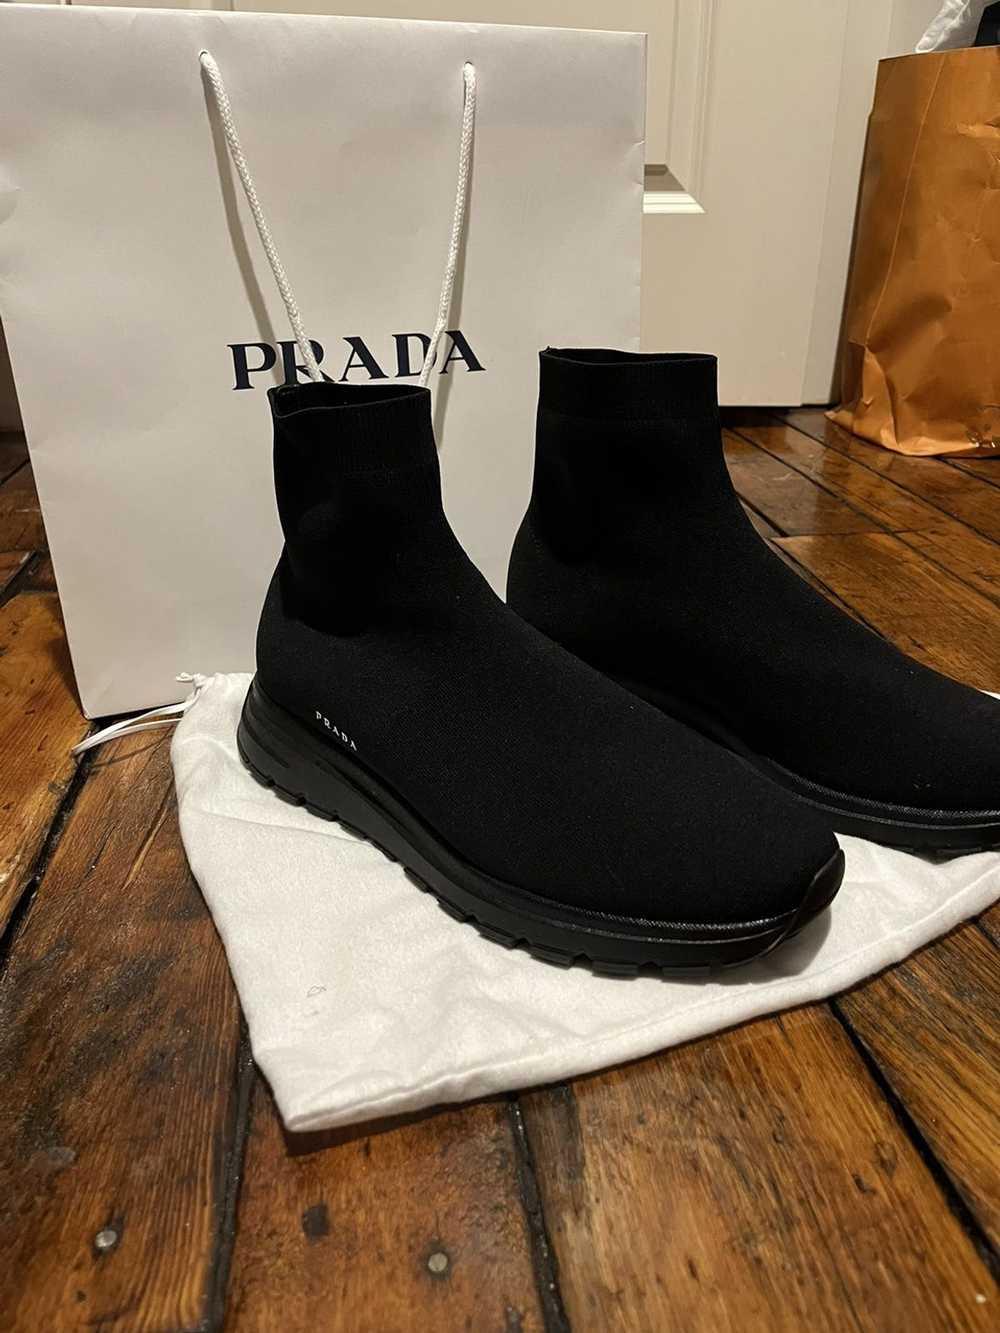 Prada Prada men shoes - image 2